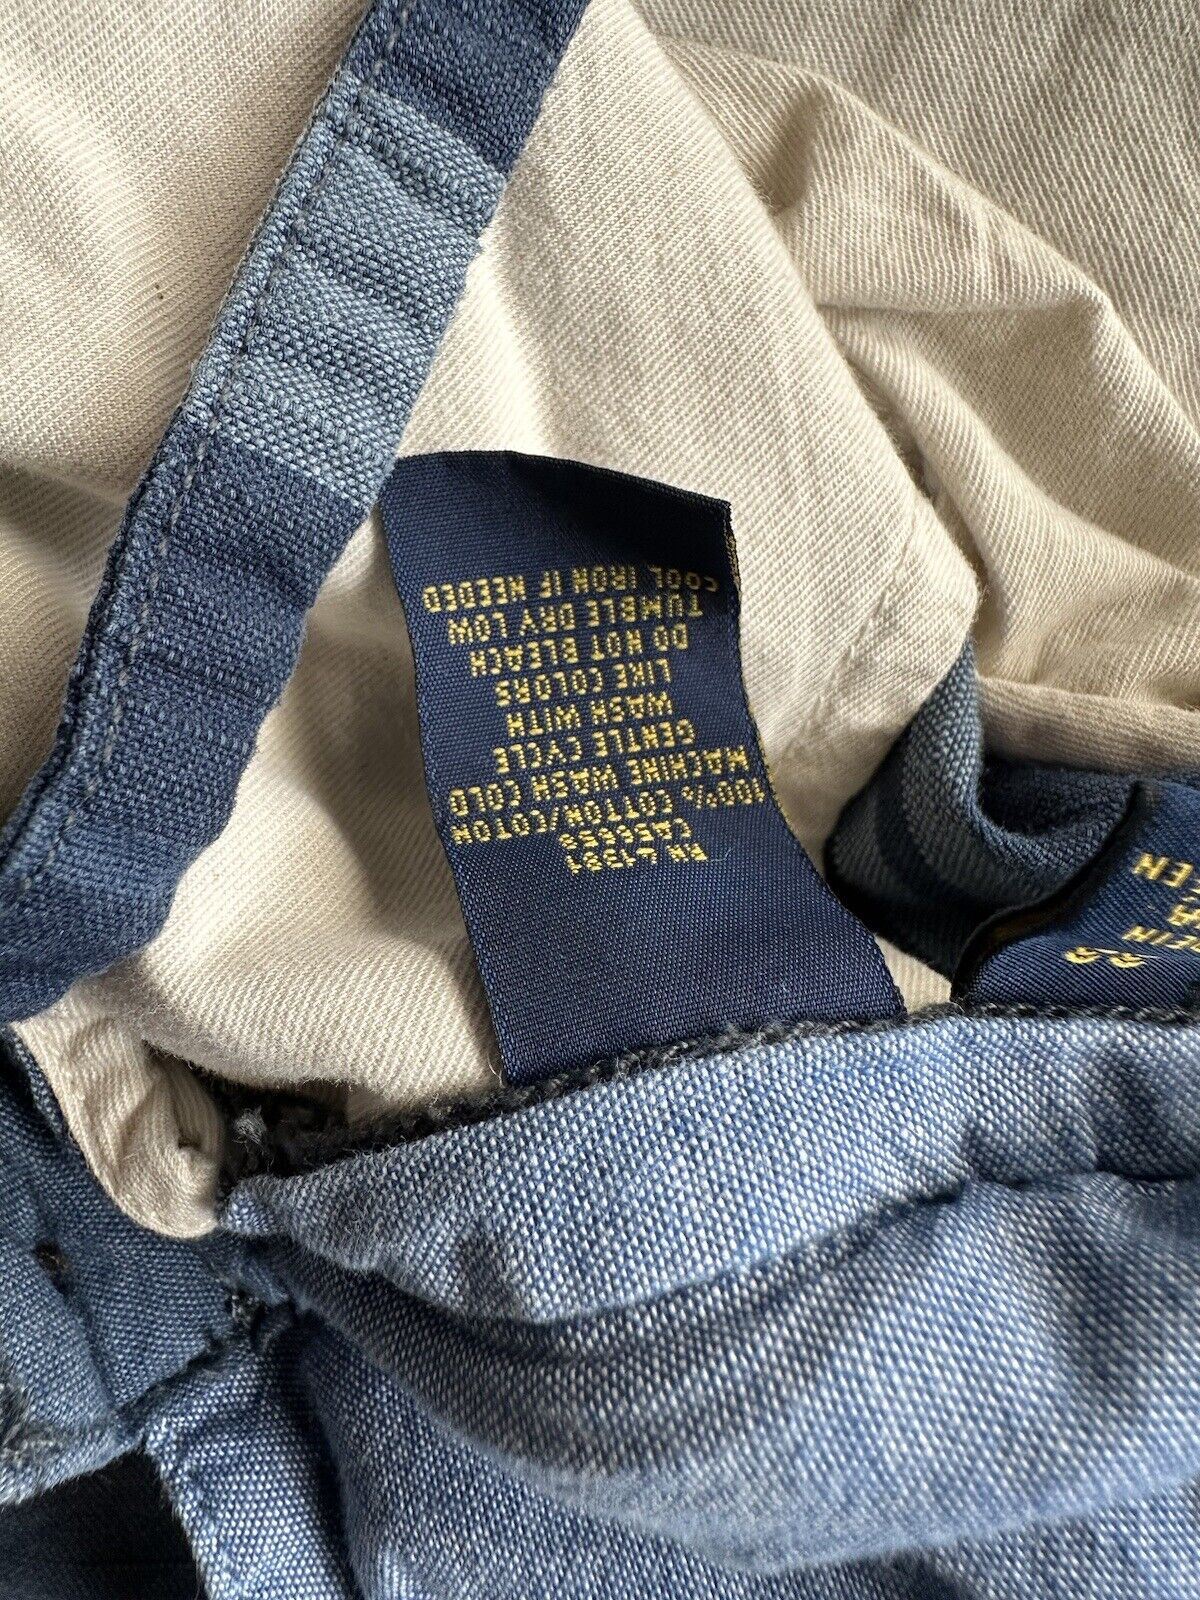 Polo Ralph Lauren Men's Straight Fit Blue Striped Shorts Size 33 US